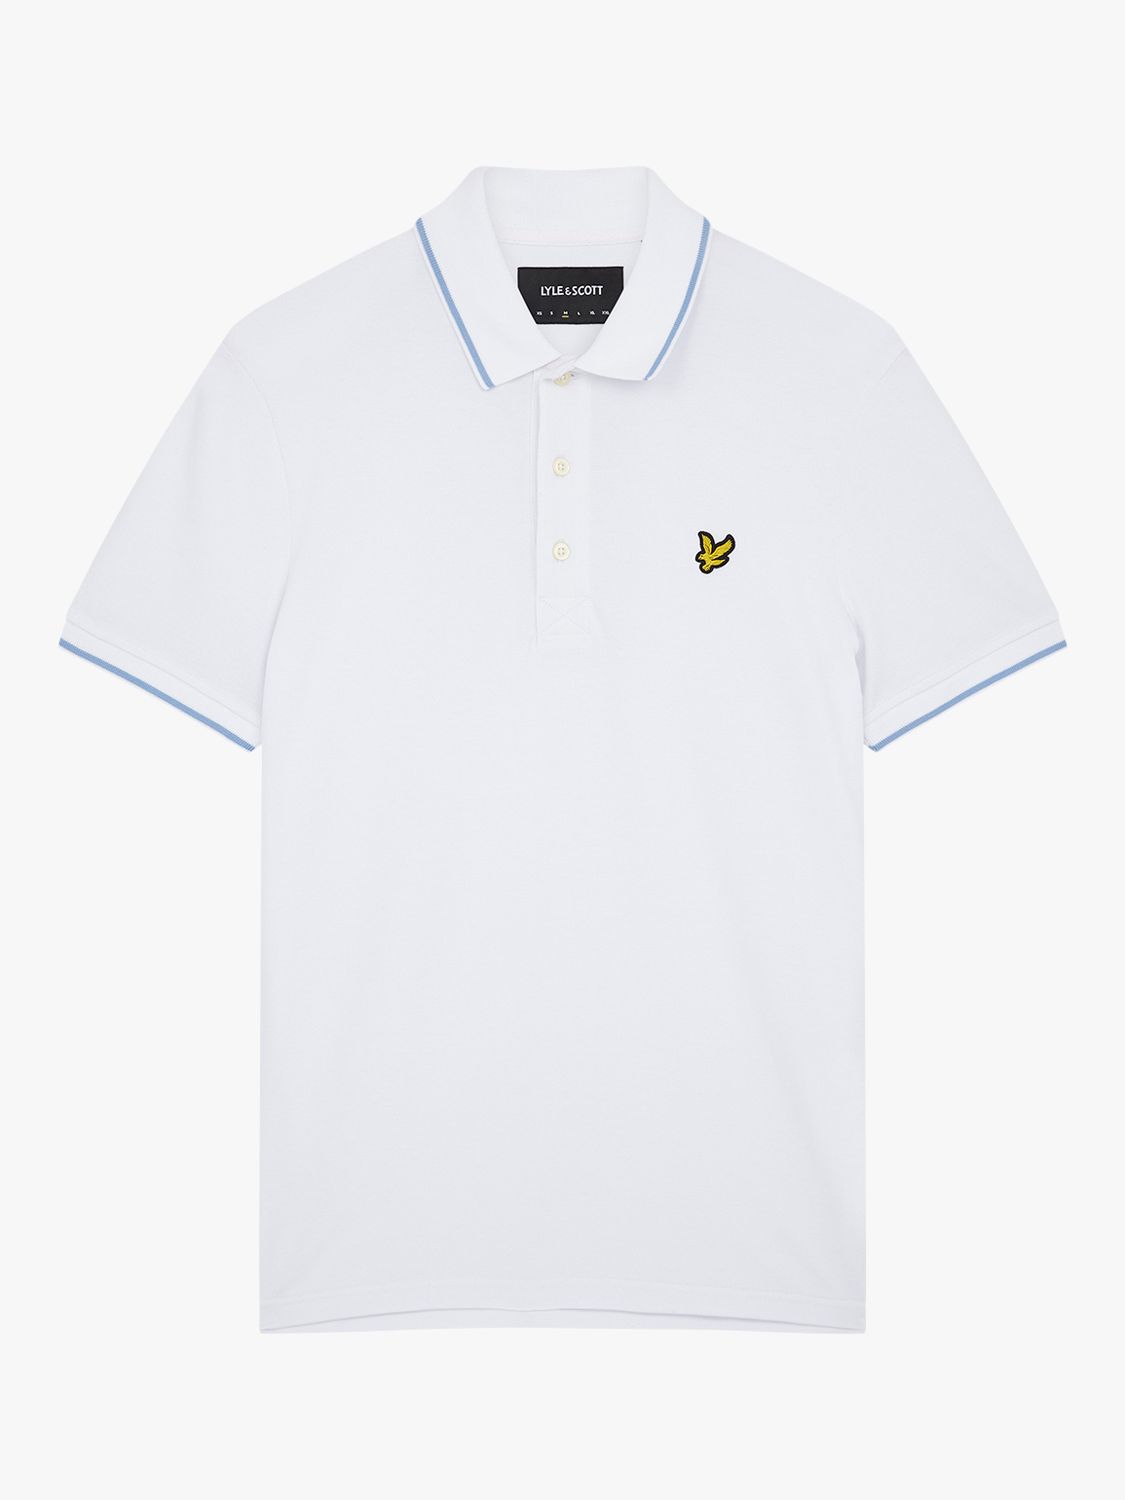 Lyle & Scott Short Sleeve Tipped Polo Shirt, W533 White/Blue, XS